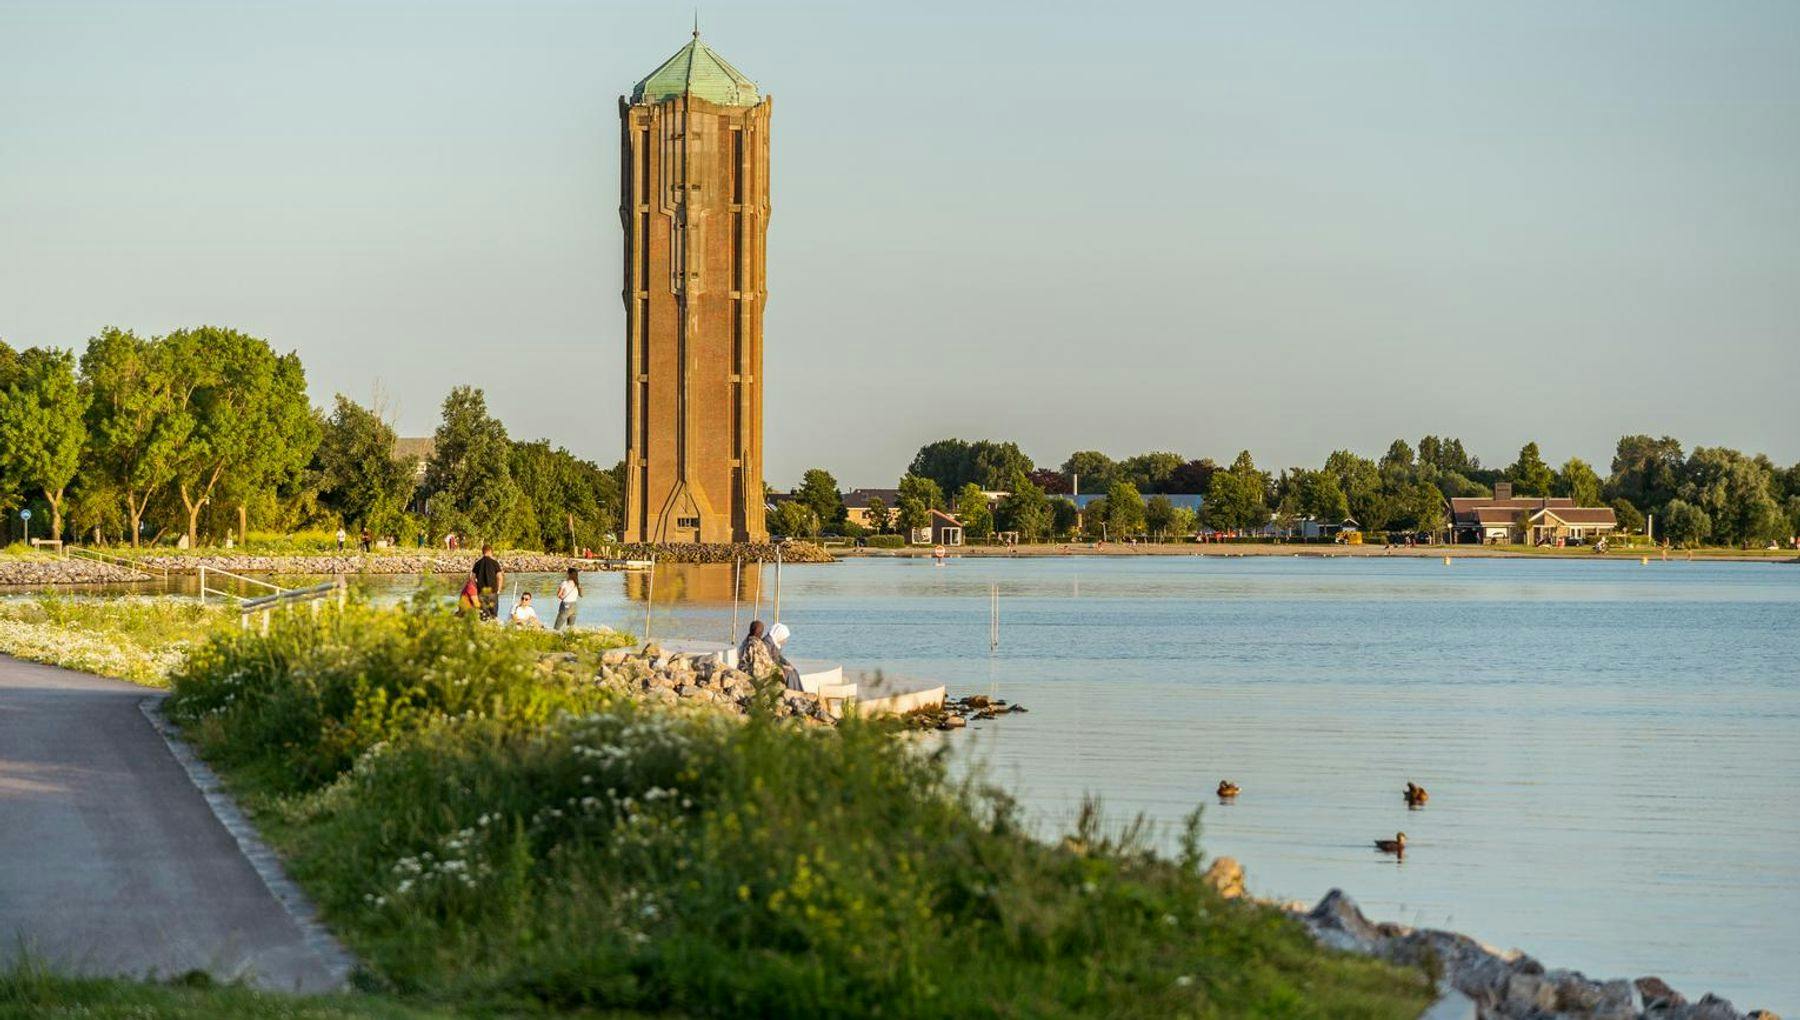 The water tower at Westeinderplassen near Aalsmeer.